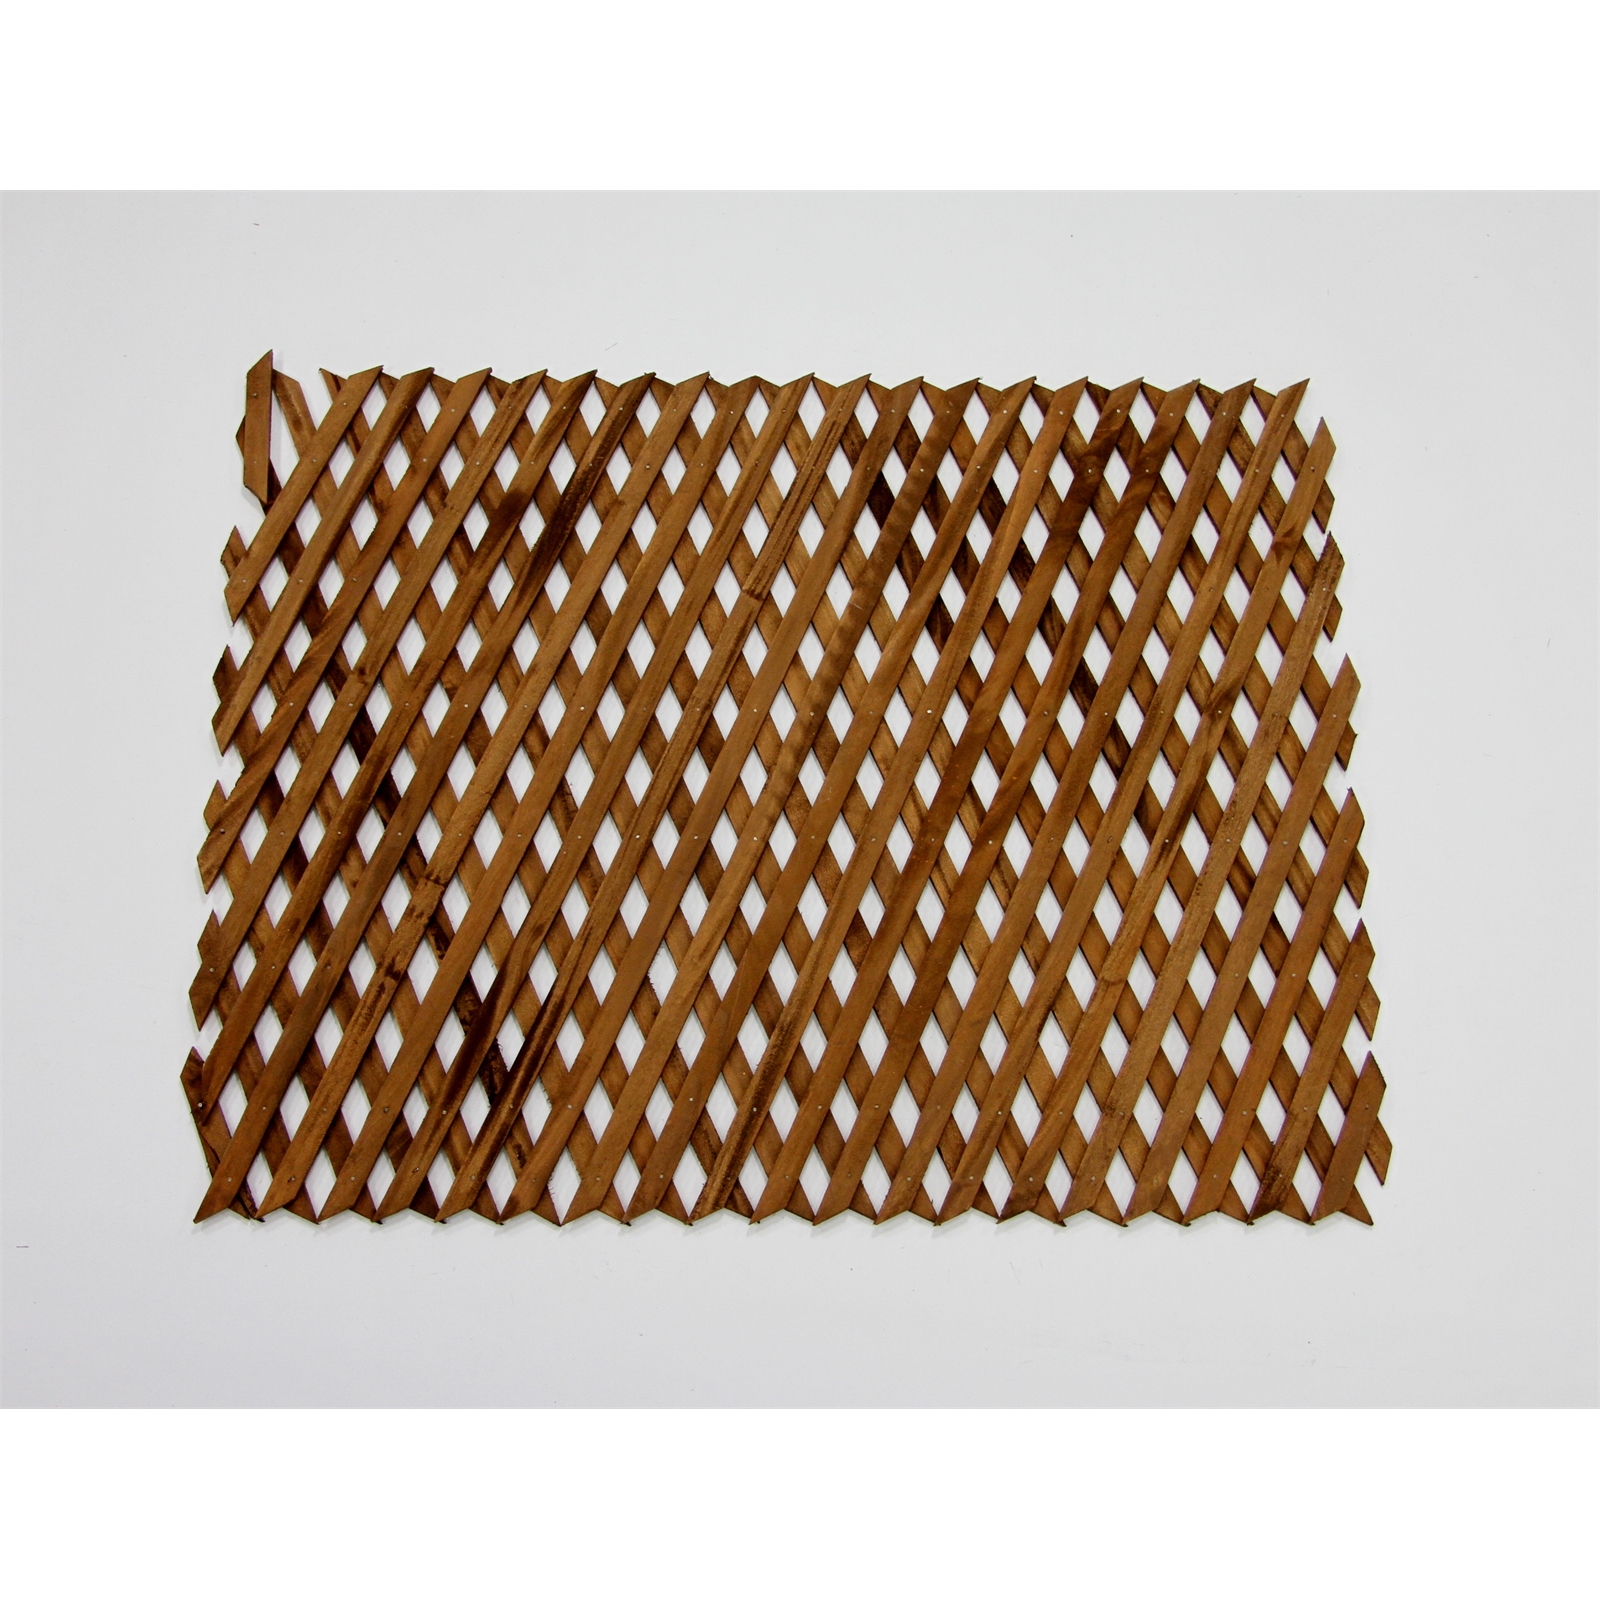 Lattice Makers 2400 x 1200mm Brown Expandable Hardwood Trellis